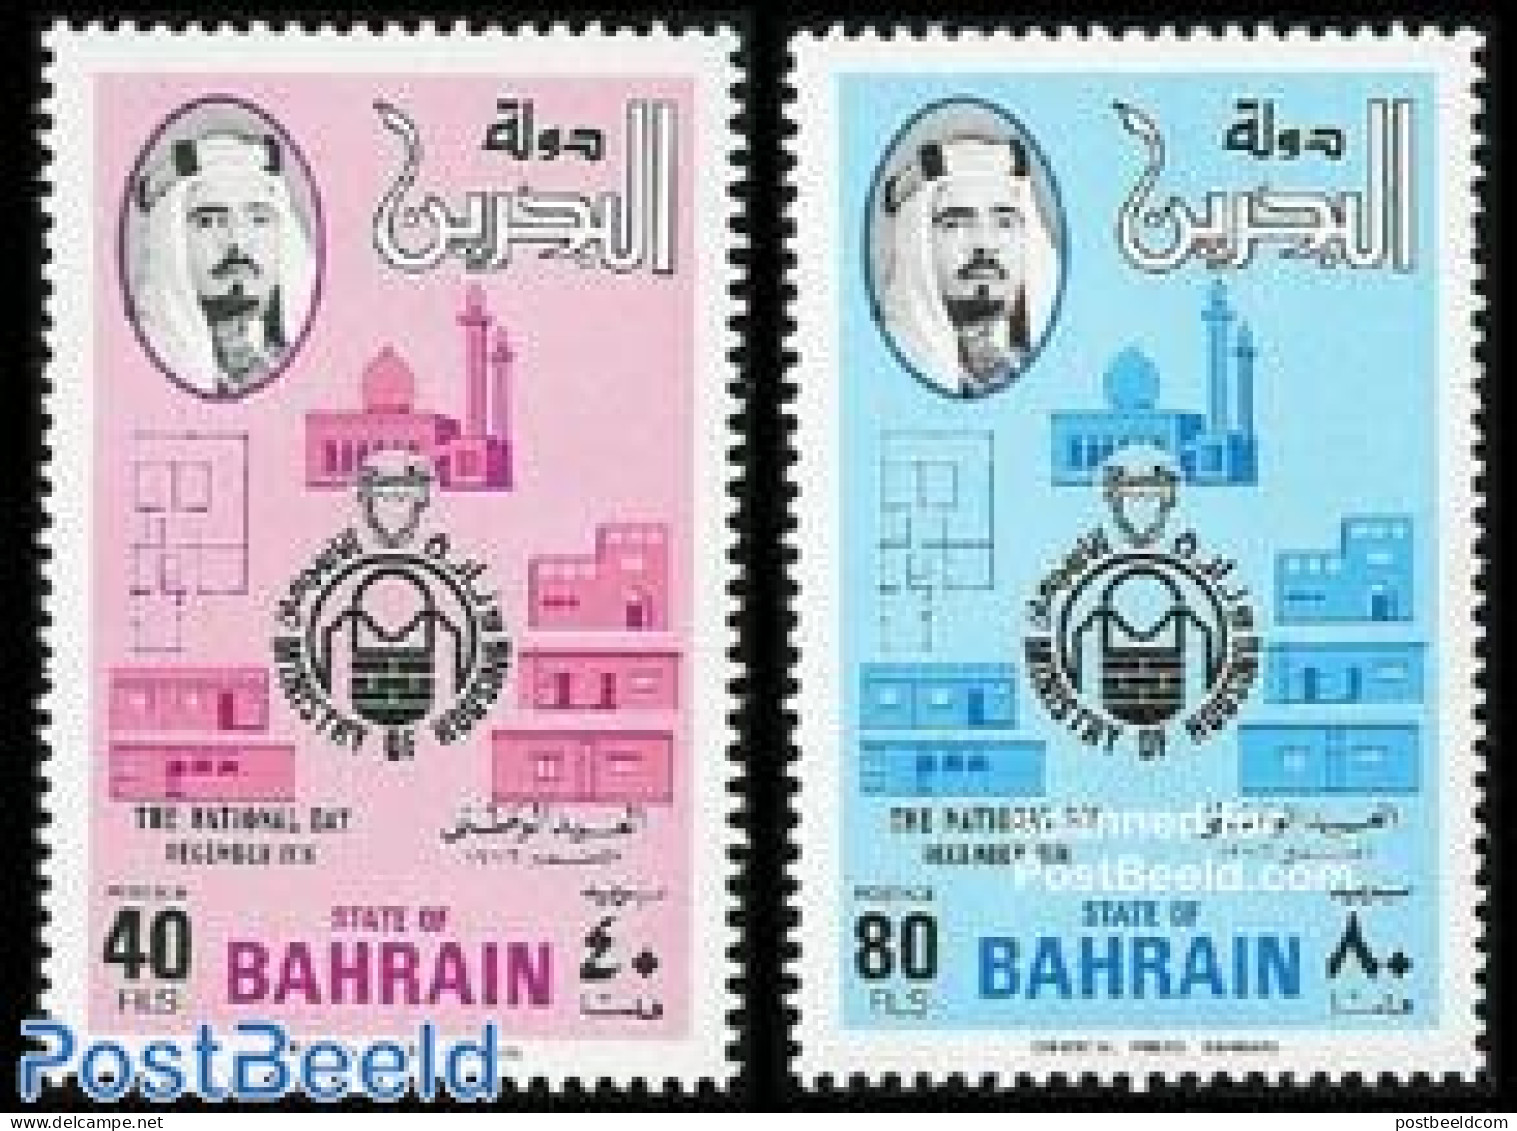 Bahrain 1976 National Day 2v, Mint NH - Bahrein (1965-...)